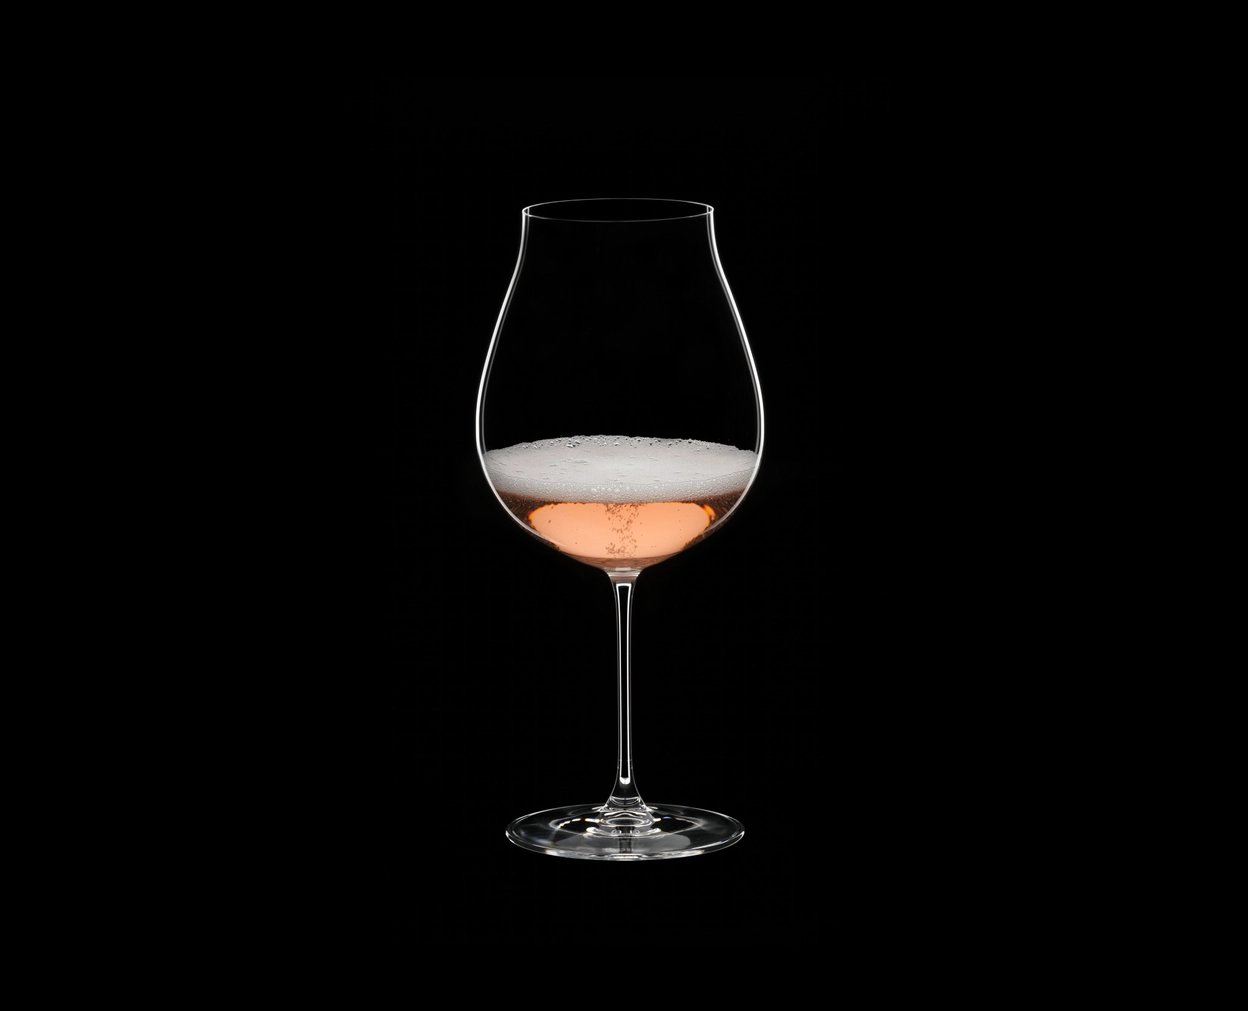 Riedel Veritas Calici New World Pinot Noir/Nebbiolo/Rosè, Set di 2 bicchieri